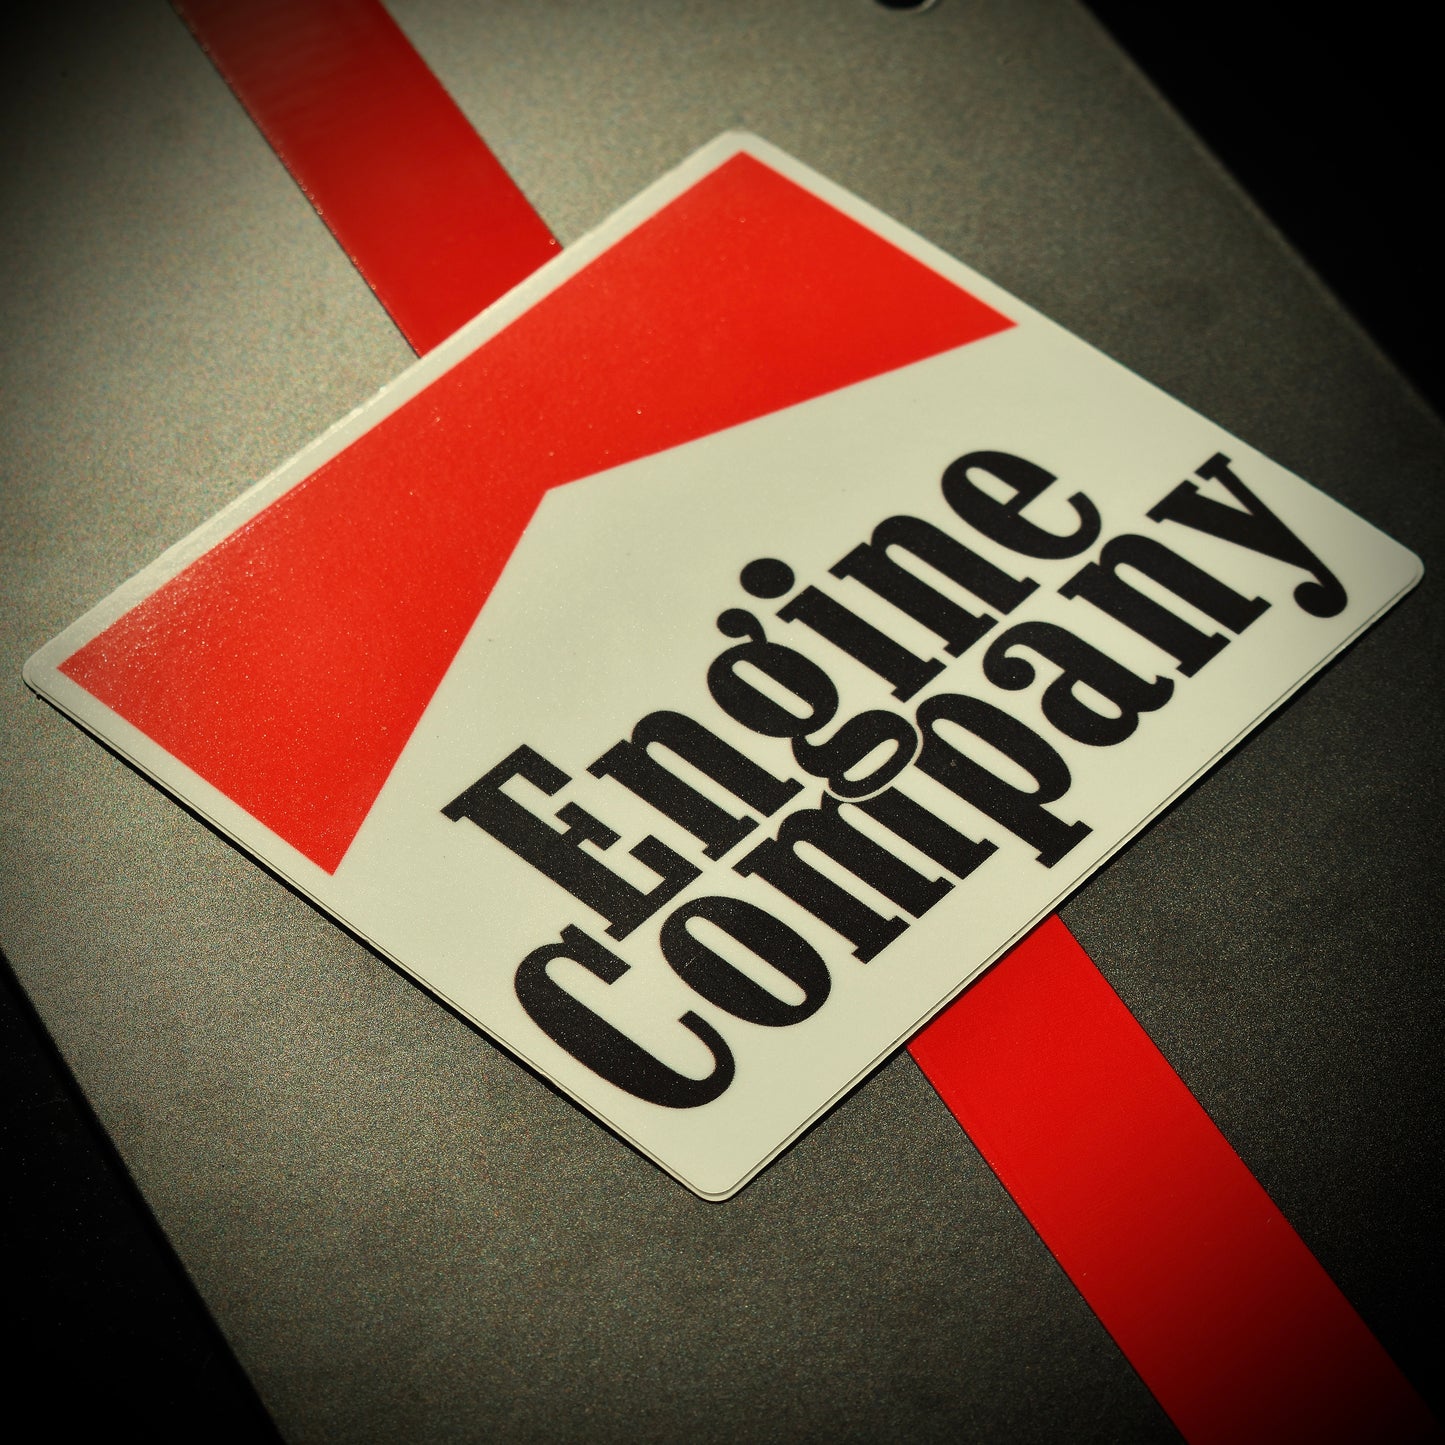 Engine Company